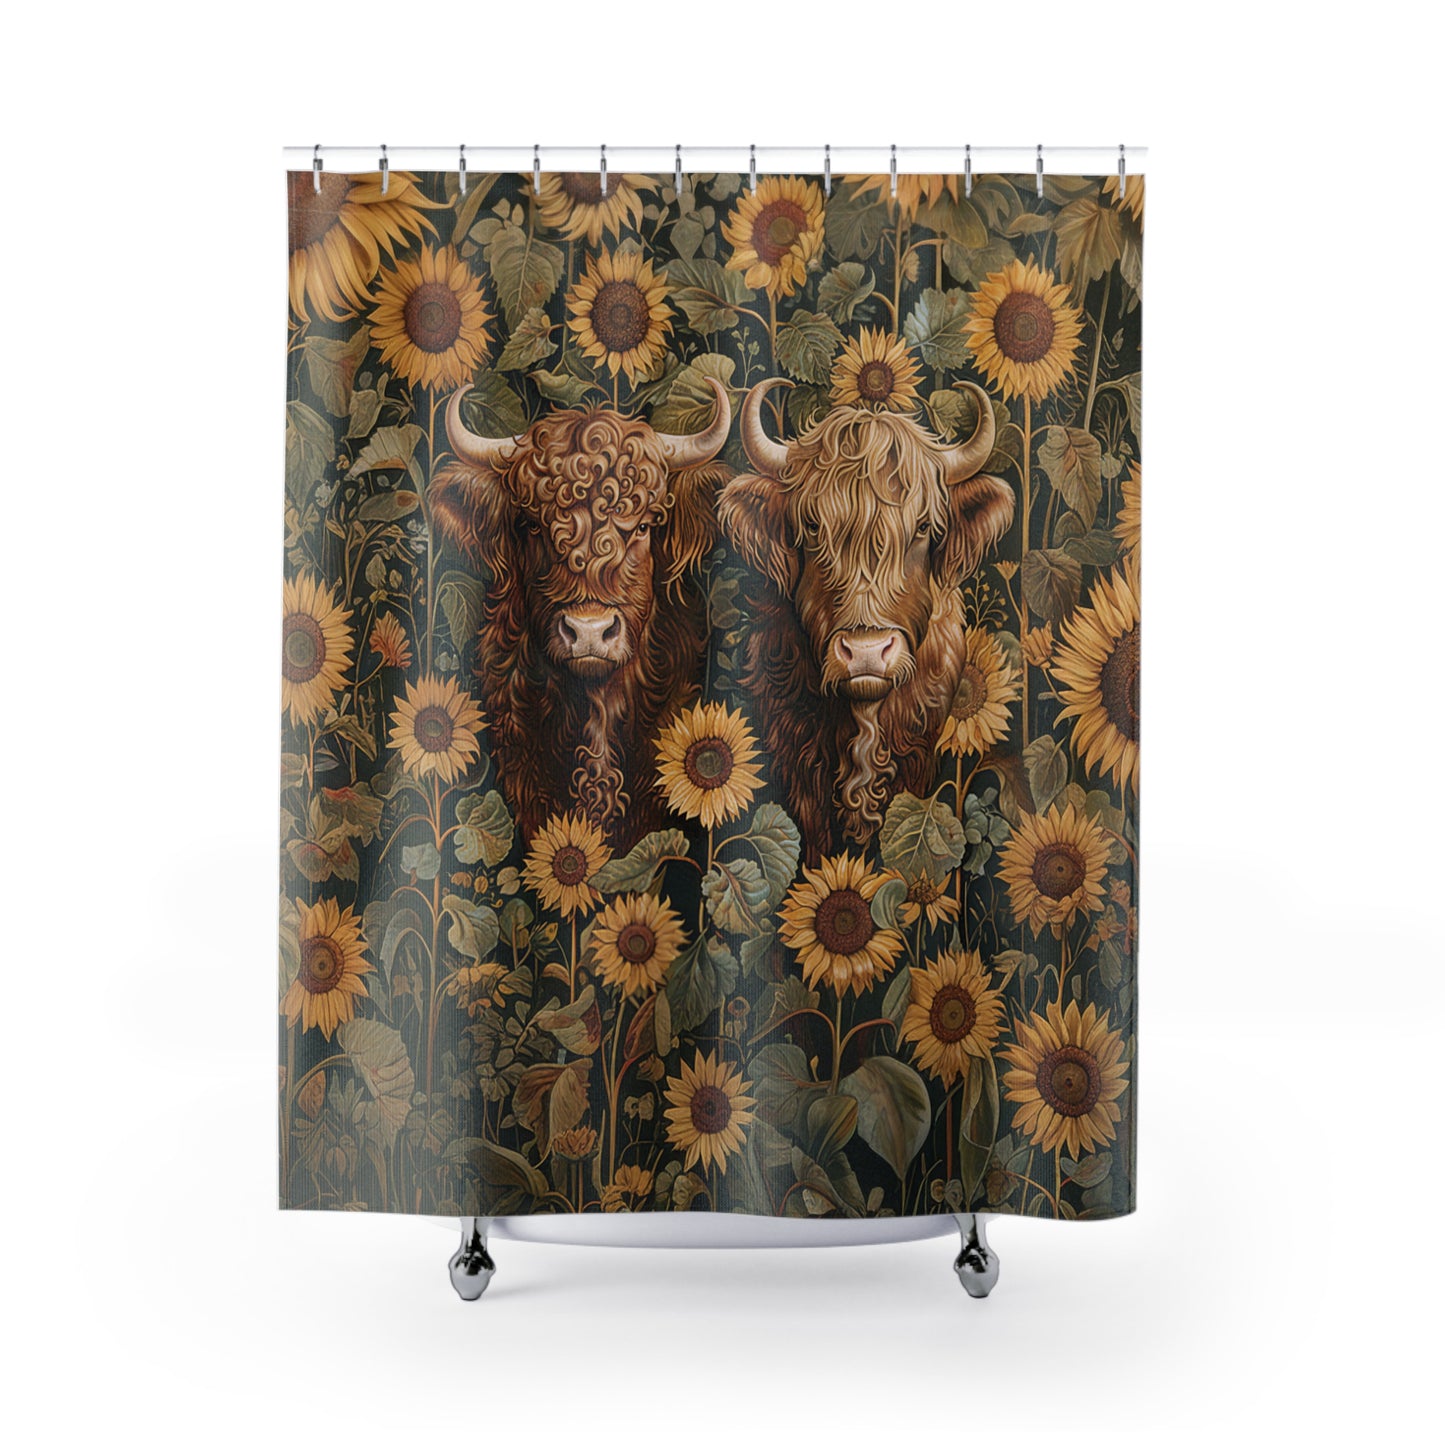 Cute Highland Cattle Sunflowers Home Decor Shower Curtain 71" x 74"